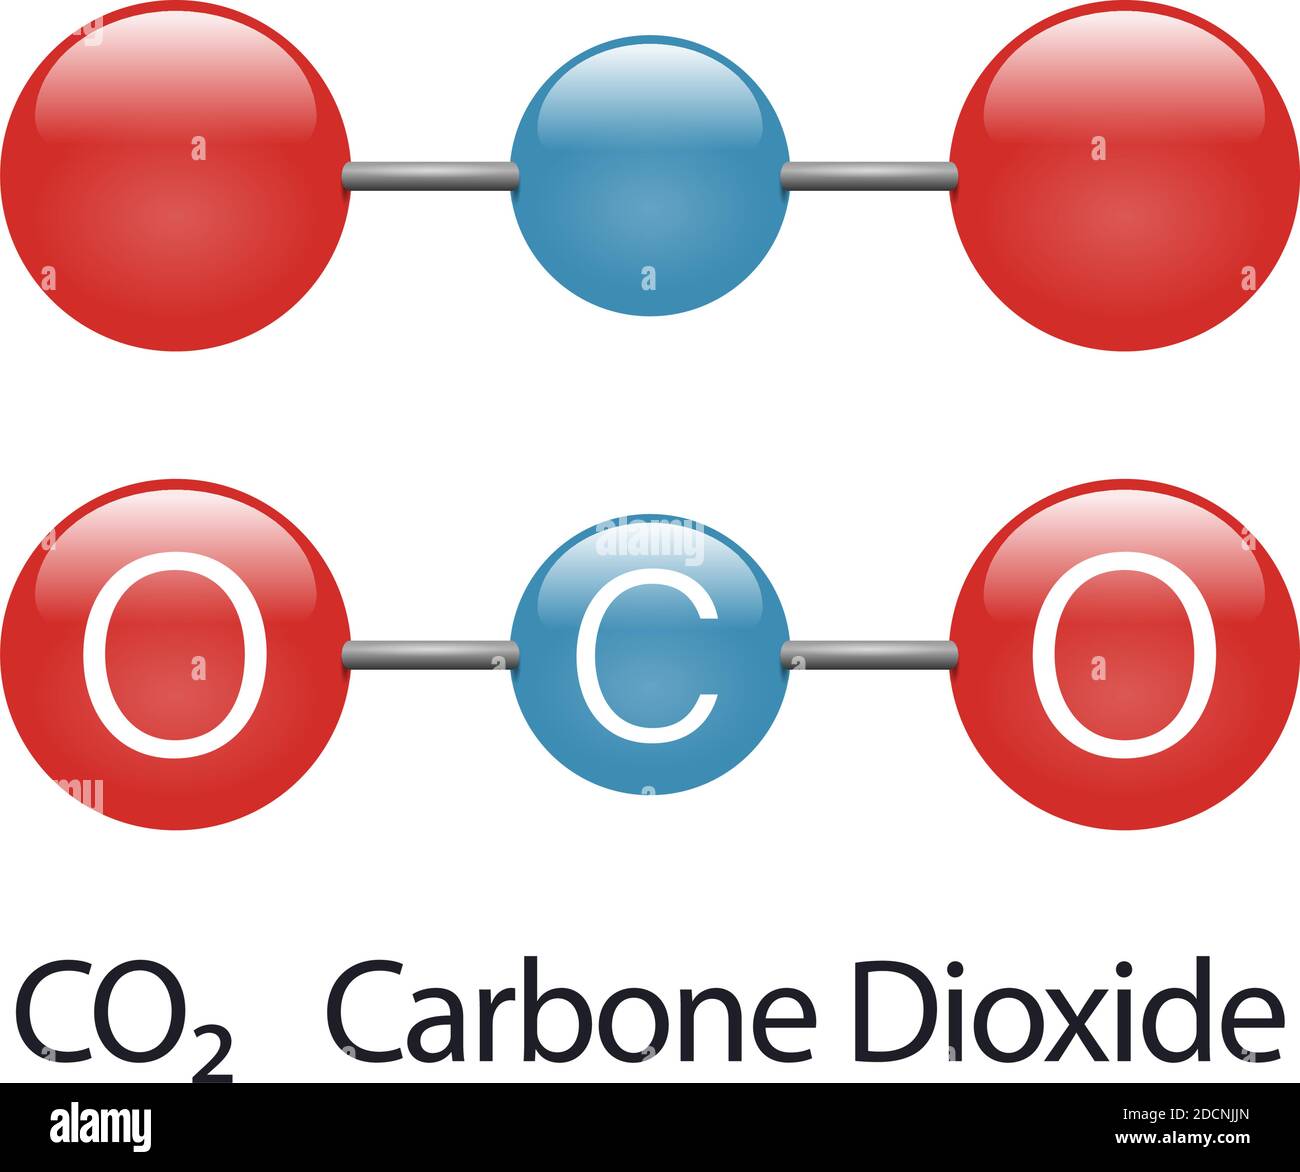 Dióxido de carbono átomo de gases de efecto invernadero modelo co2 vector  azul rojo ilustración Imagen Vector de stock - Alamy